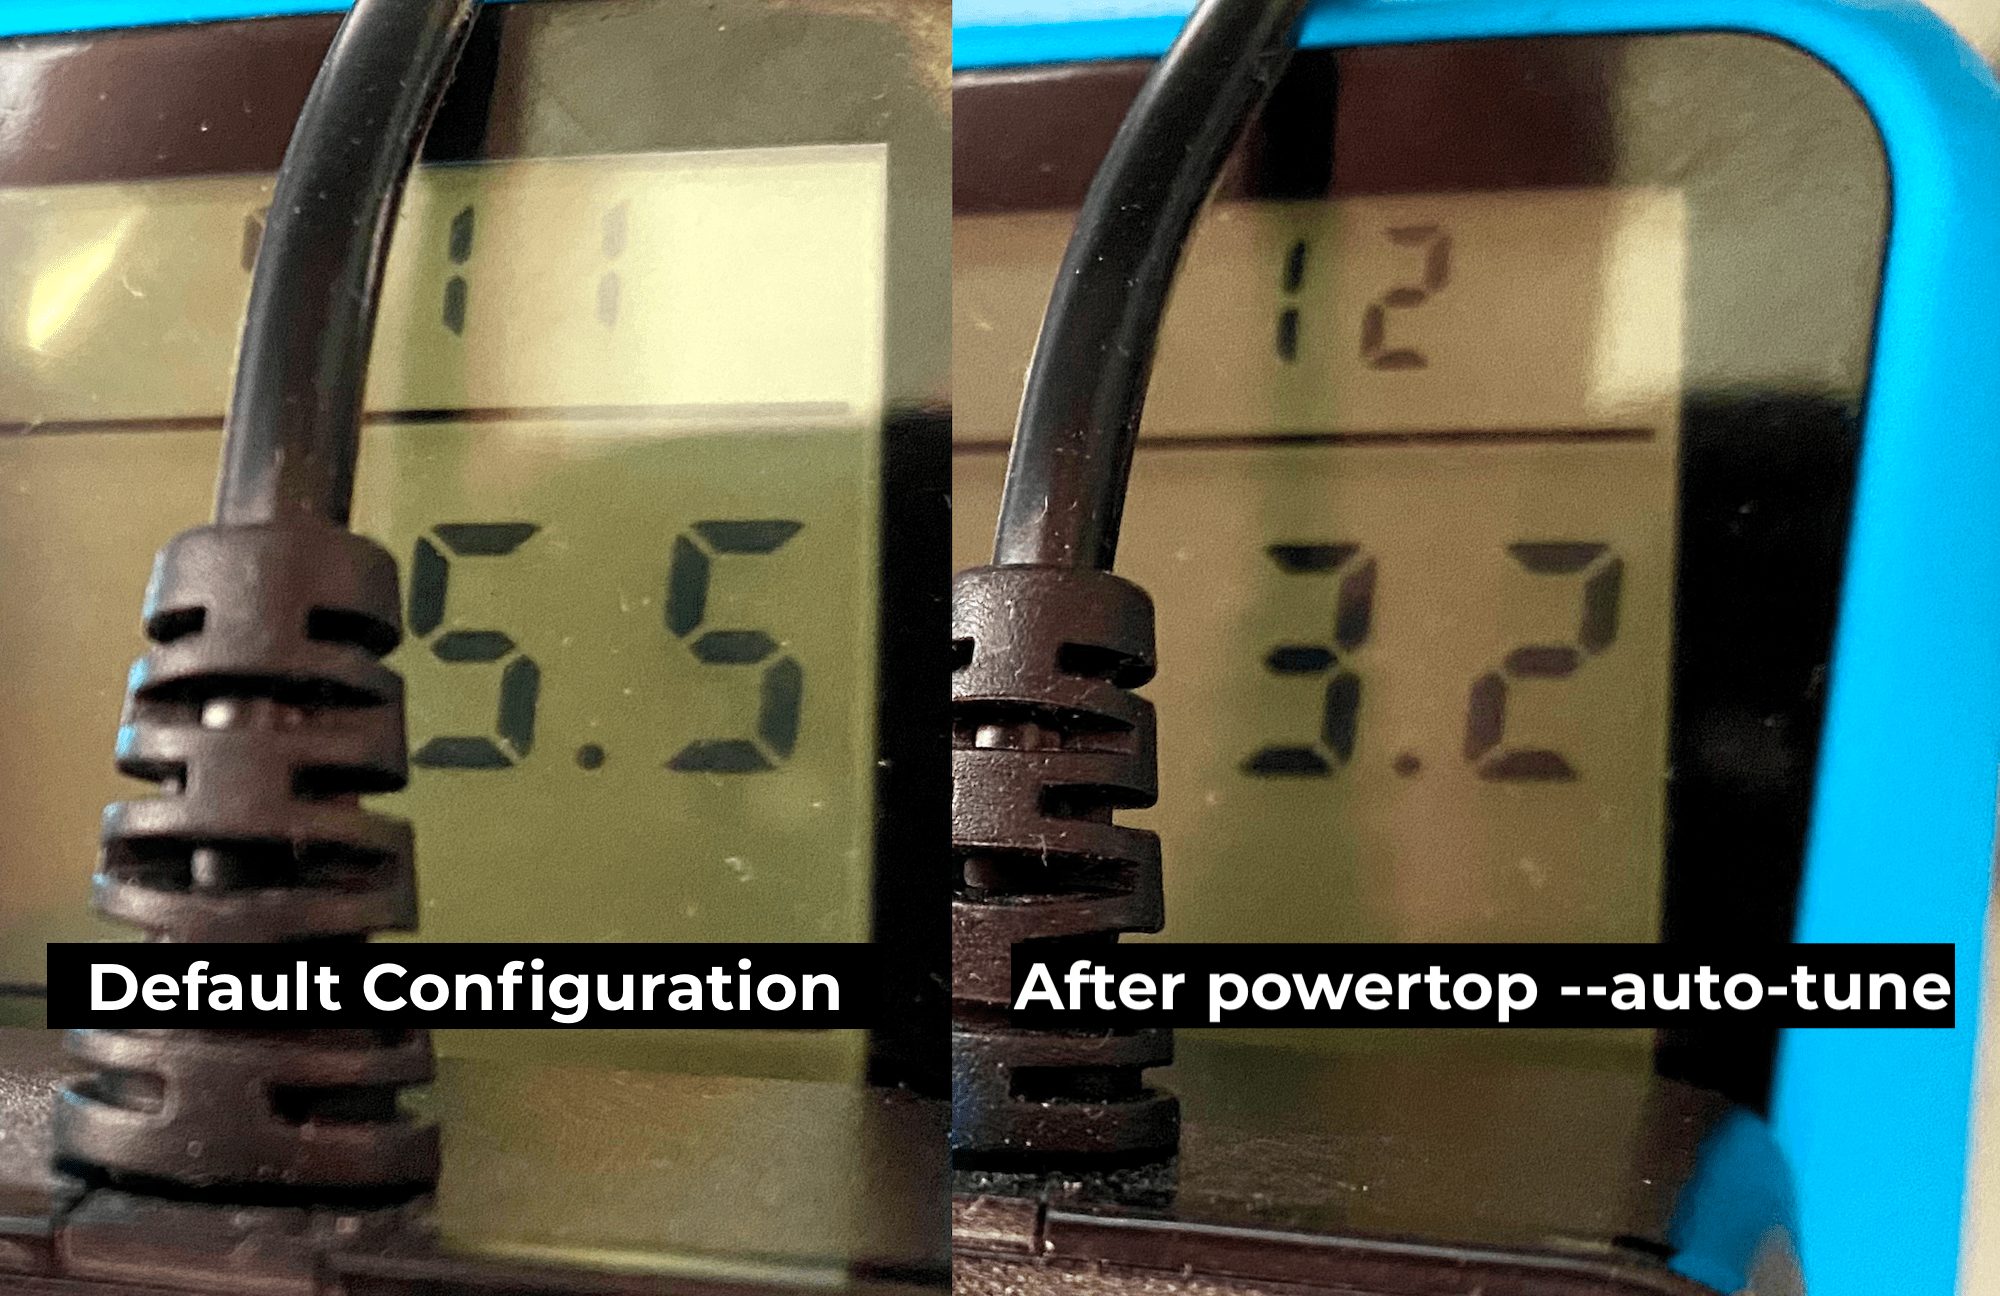 Beelink U59 power consumption before and after applying powertop optimizations